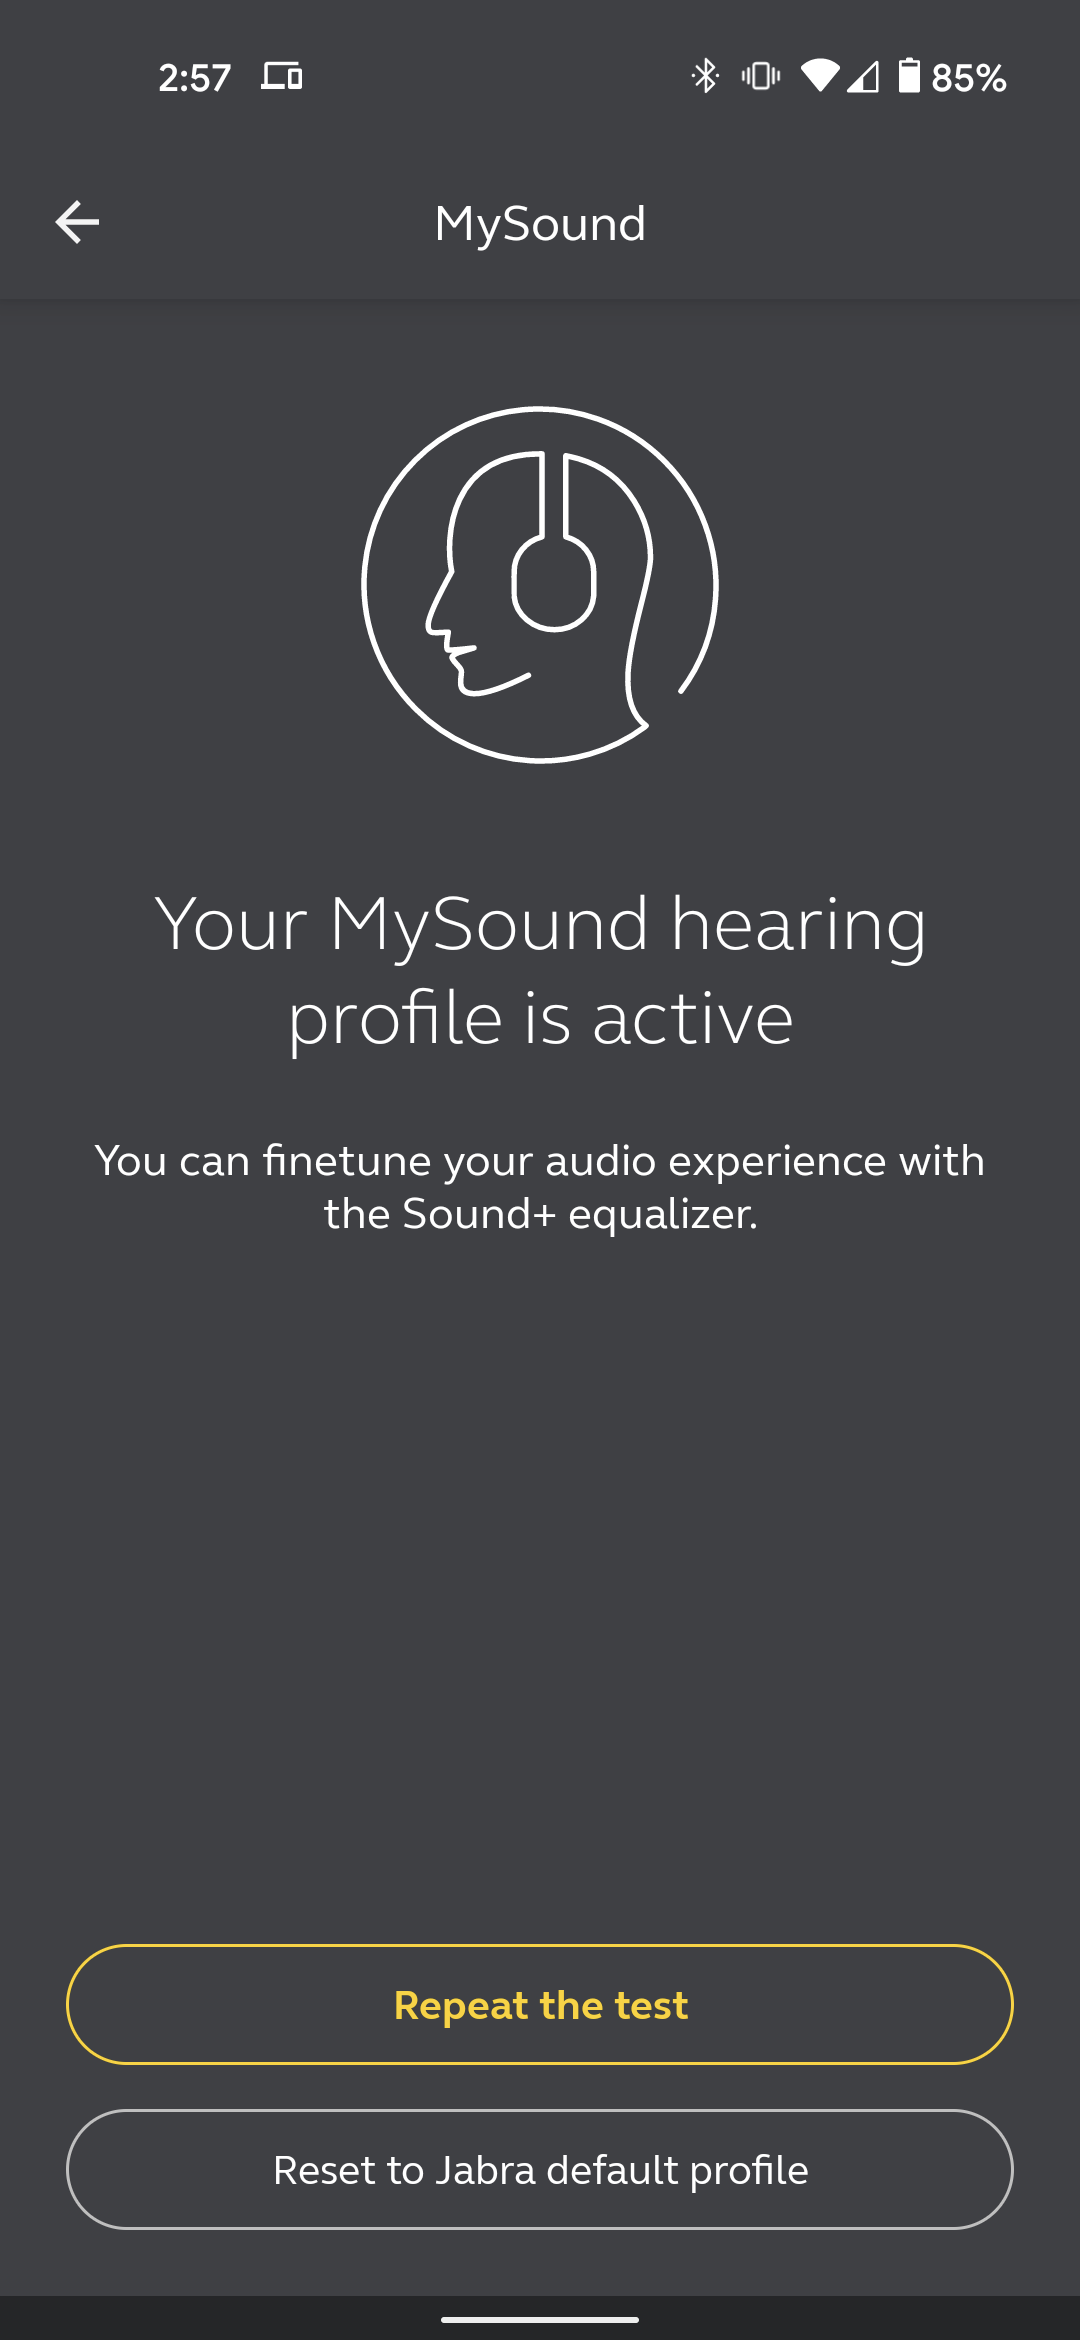 Aplikasi Suara+ dengan fitur MySound